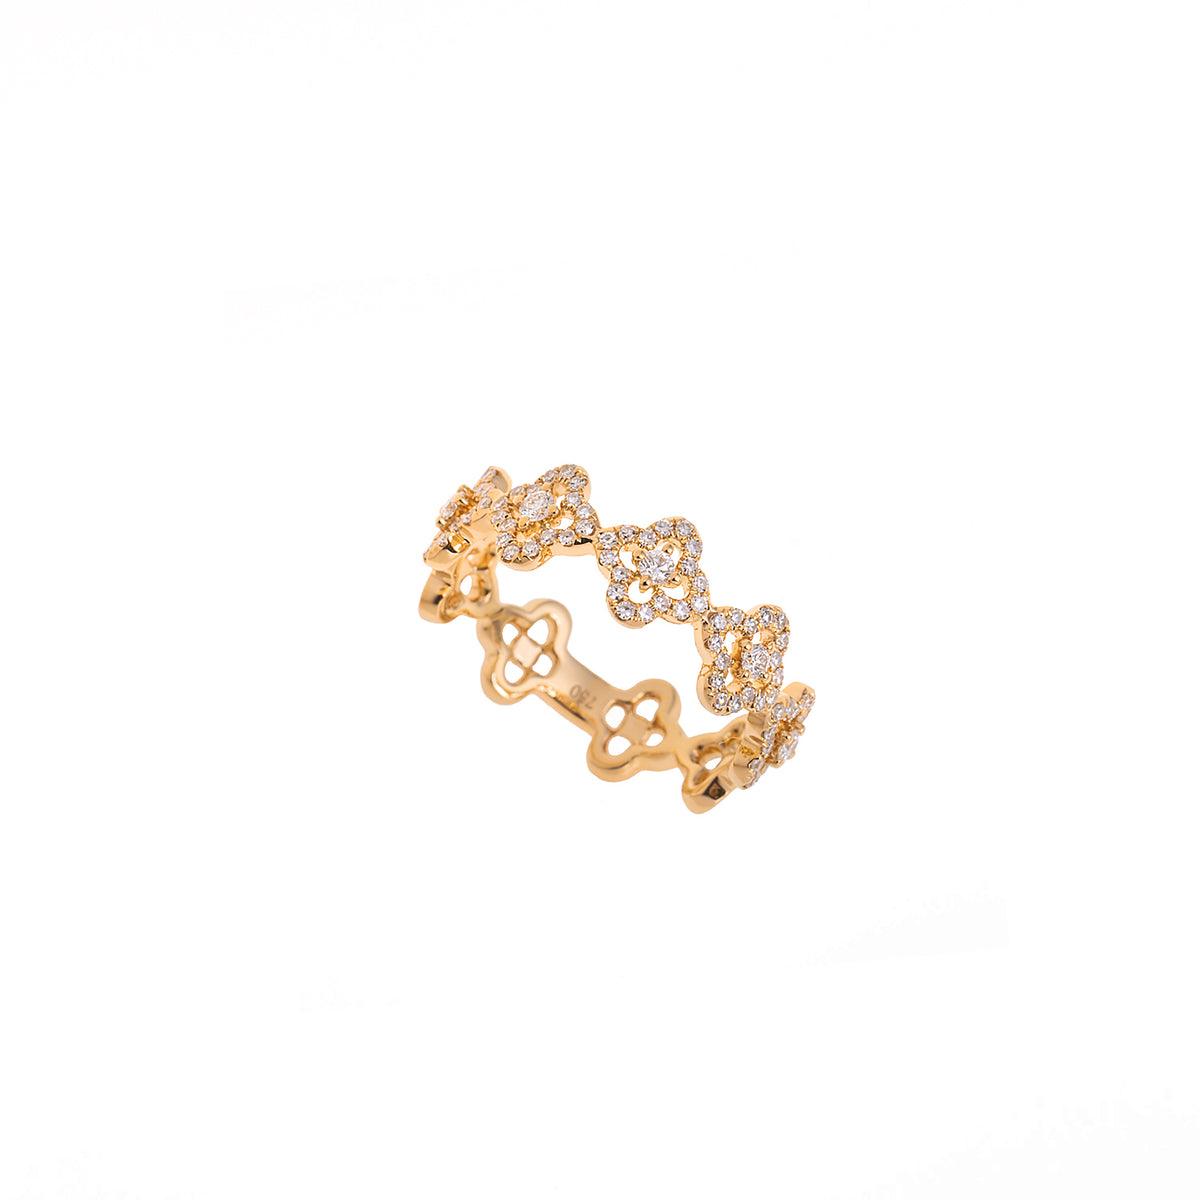 Diamond ring. Gift ring. Perfect ring for present. Precious stone ring. Anatol jewelry. Fine Jewelry. Golden Hall. Kifissia. Δαχτυλίδι με διαμάντια. Δαχτυλίδι για δώρο. Ζαφείρια. Ρουμπίνια. Σμαράγδια. Athens.